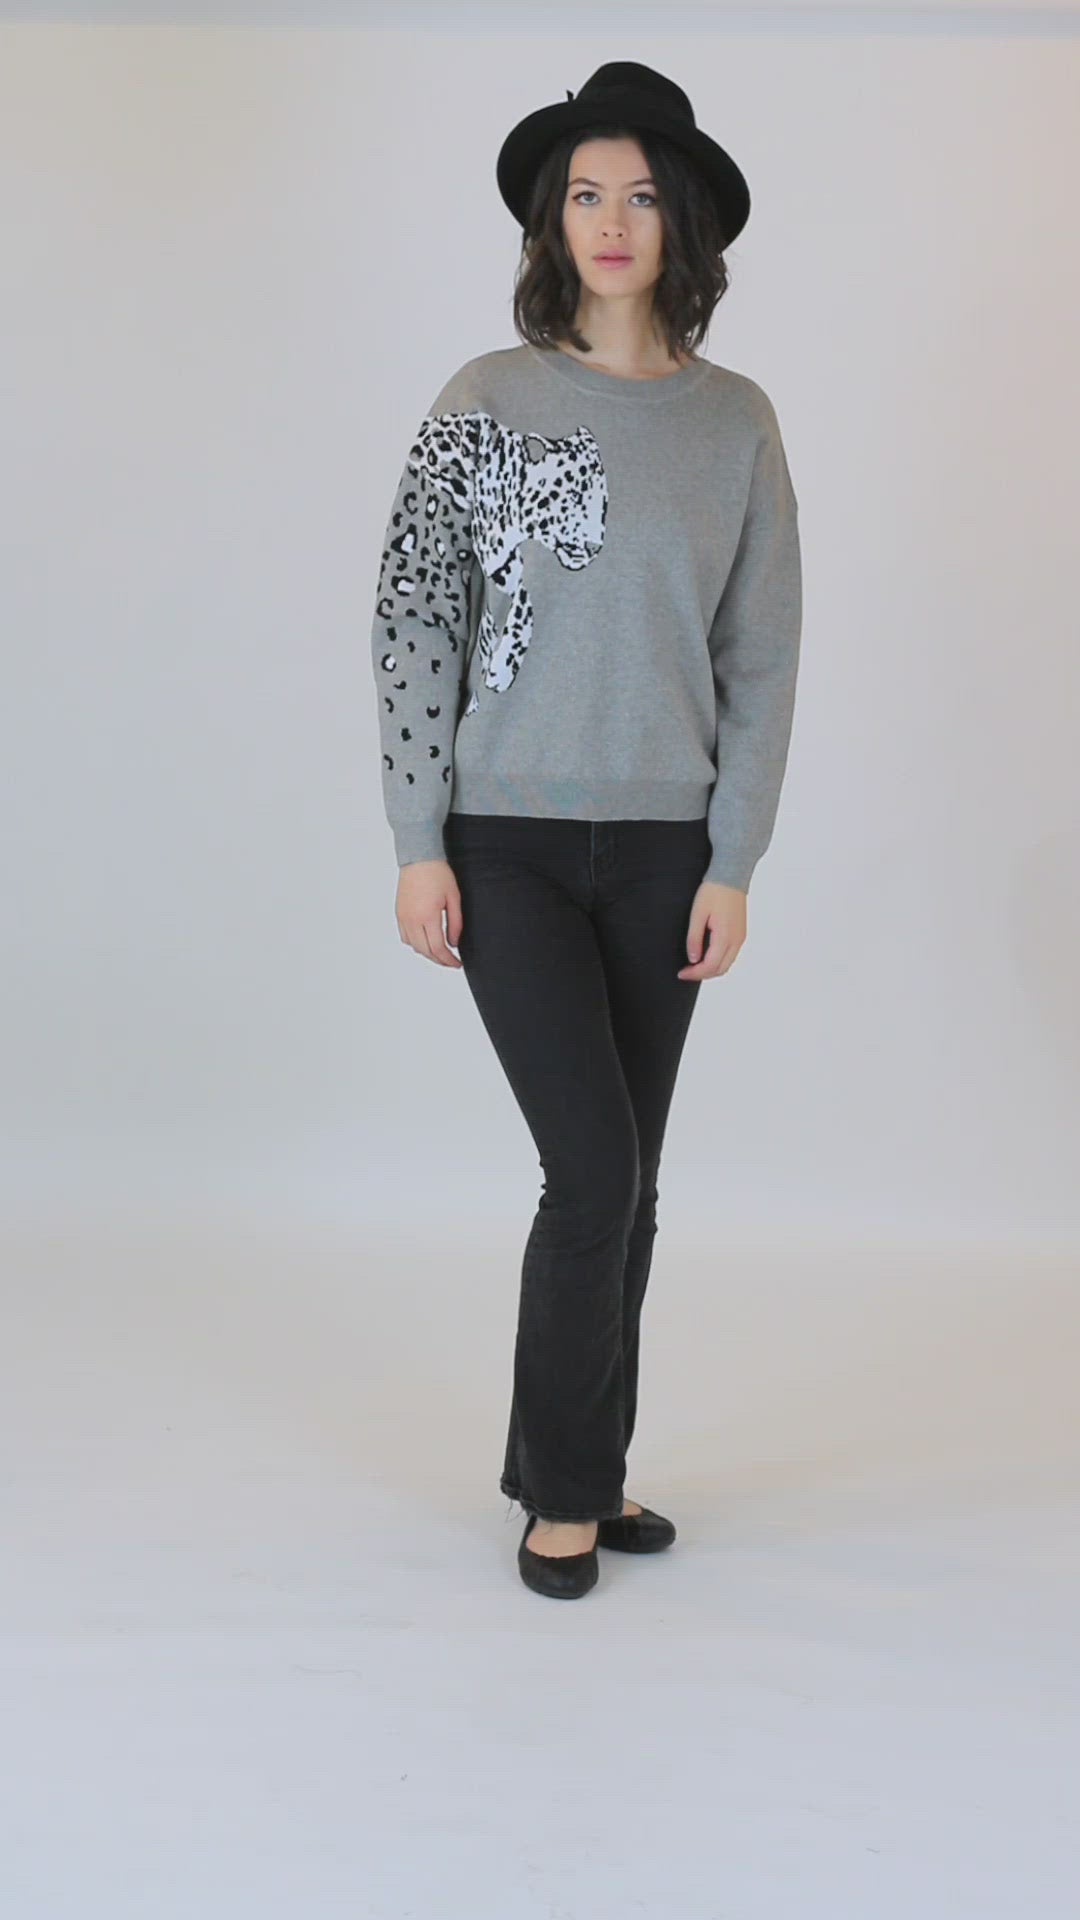 Buy Women's Grey Pullover Sweaters Online